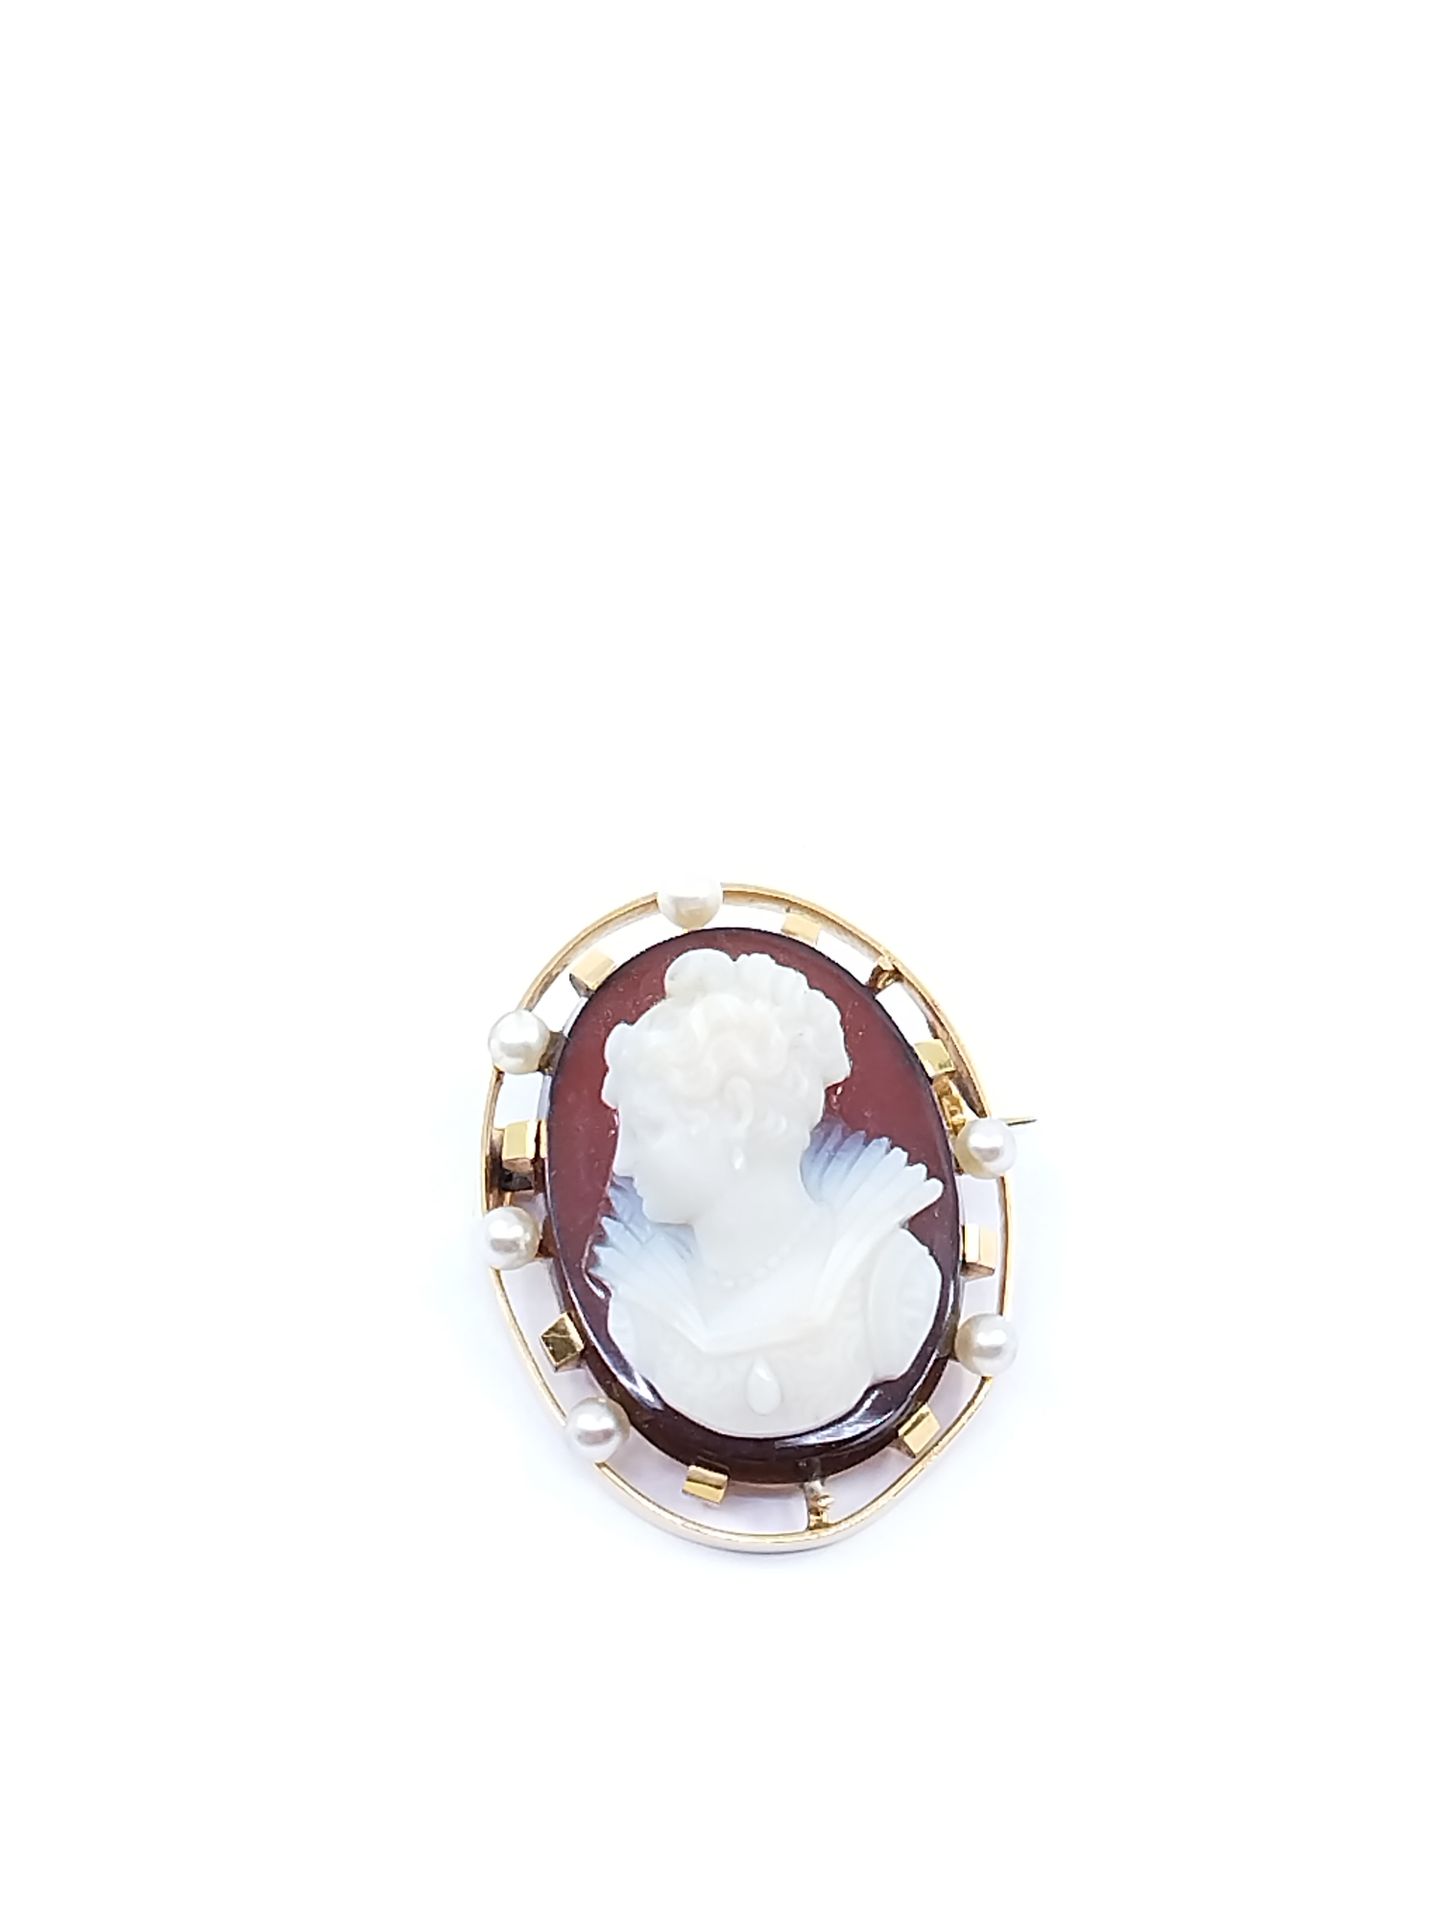 Null 法国的工作

红玉髓上的CAMEE代表一位女士的轮廓，750°的黄金戒指上有珍珠点缀（缺失）。

变形的环

毛重 : 10,48 g